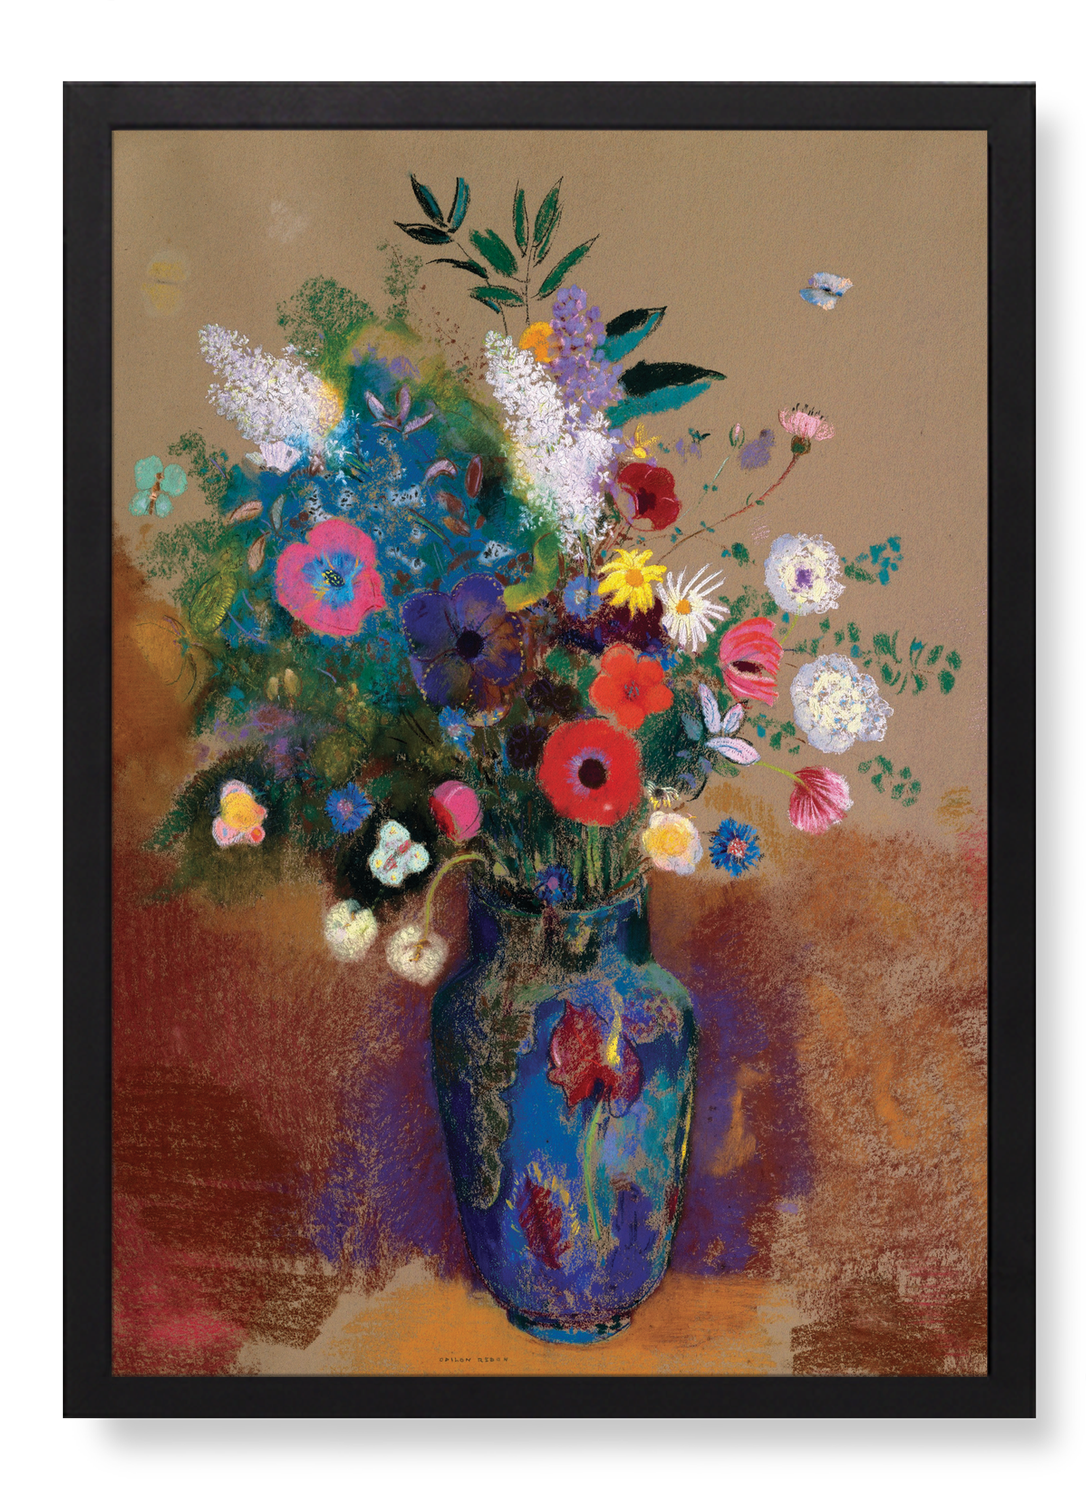 BOUQUET OF FLOWERS (1900-1905)